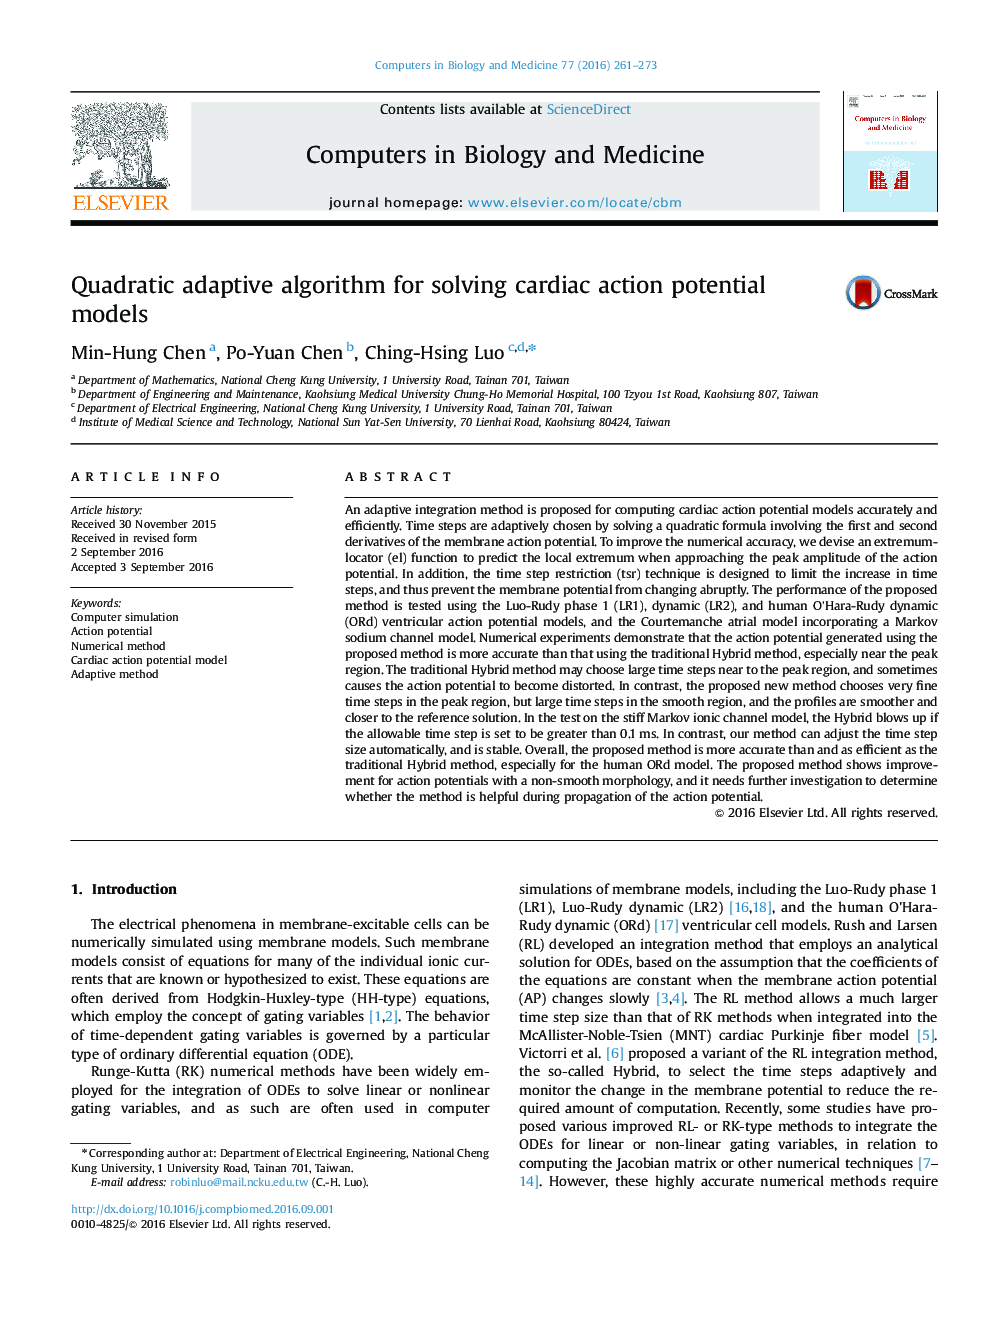 Quadratic adaptive algorithm for solving cardiac action potential models